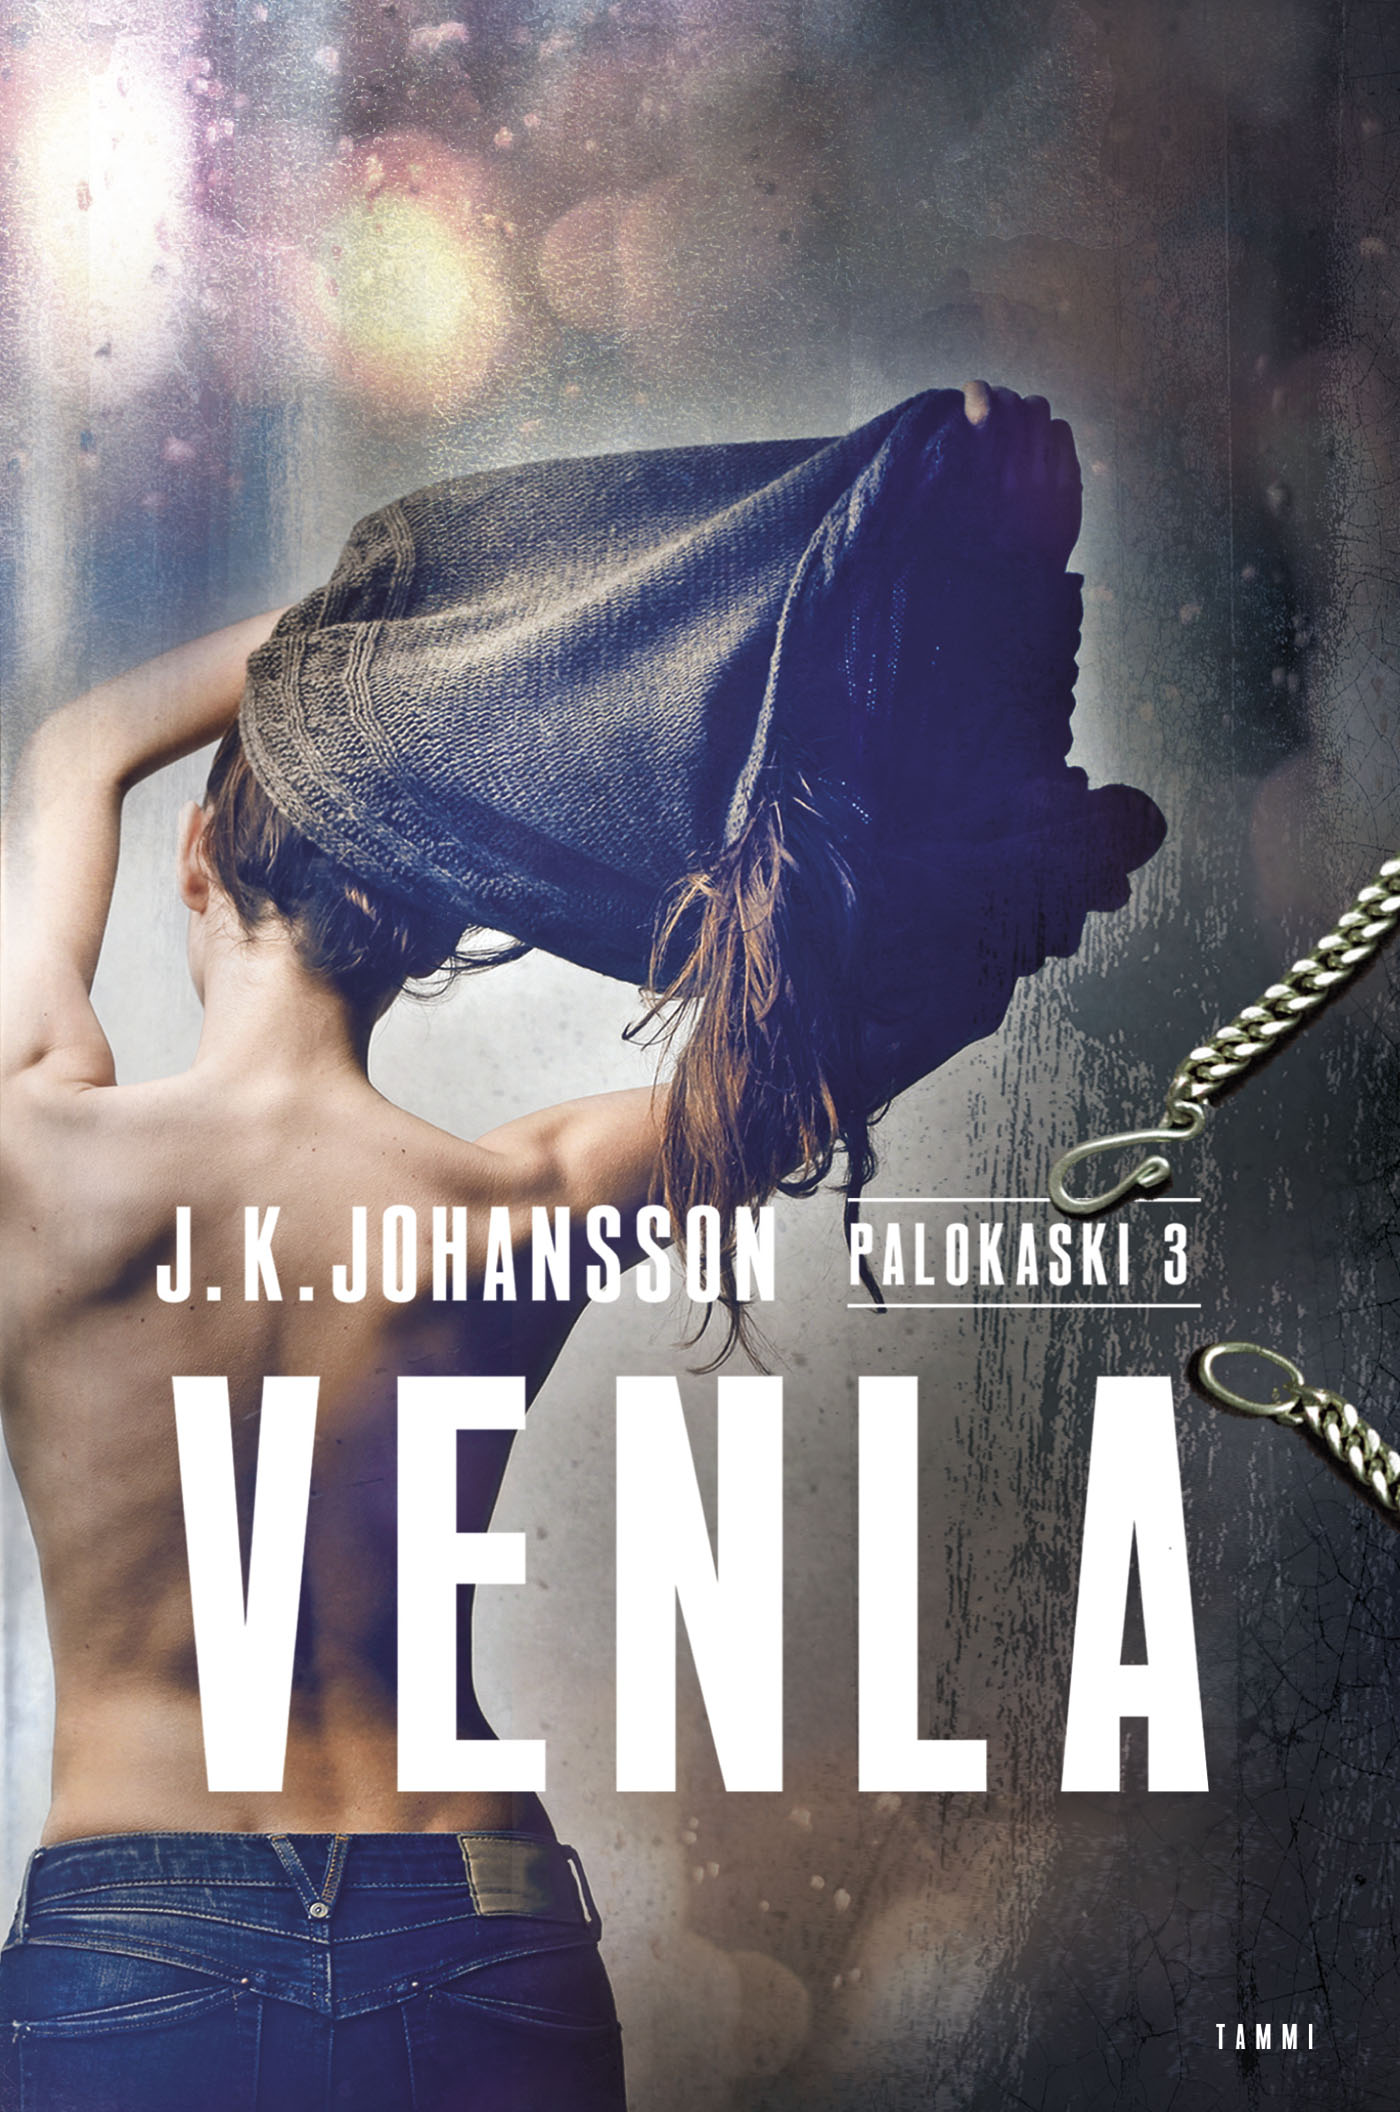 Johansson, J. K. - Venla: Palokaski 3, ebook